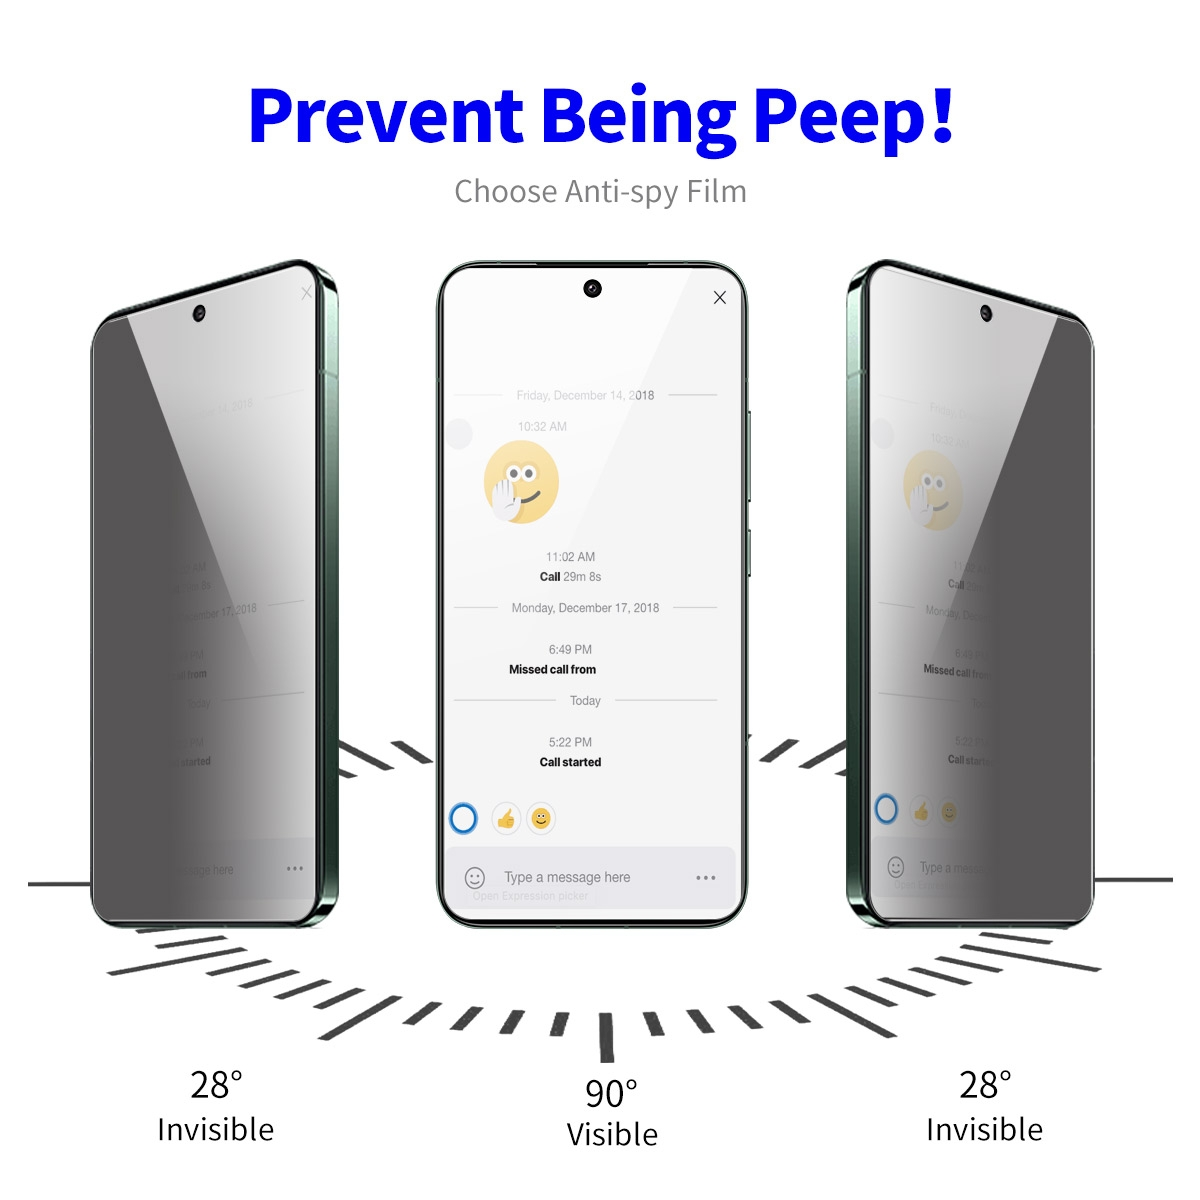 PROTECTORKING Pro) ANTI-SPY Displayschutzfolie(für 9H Privacy 2x 13 Xiaomi Panzerhartglas